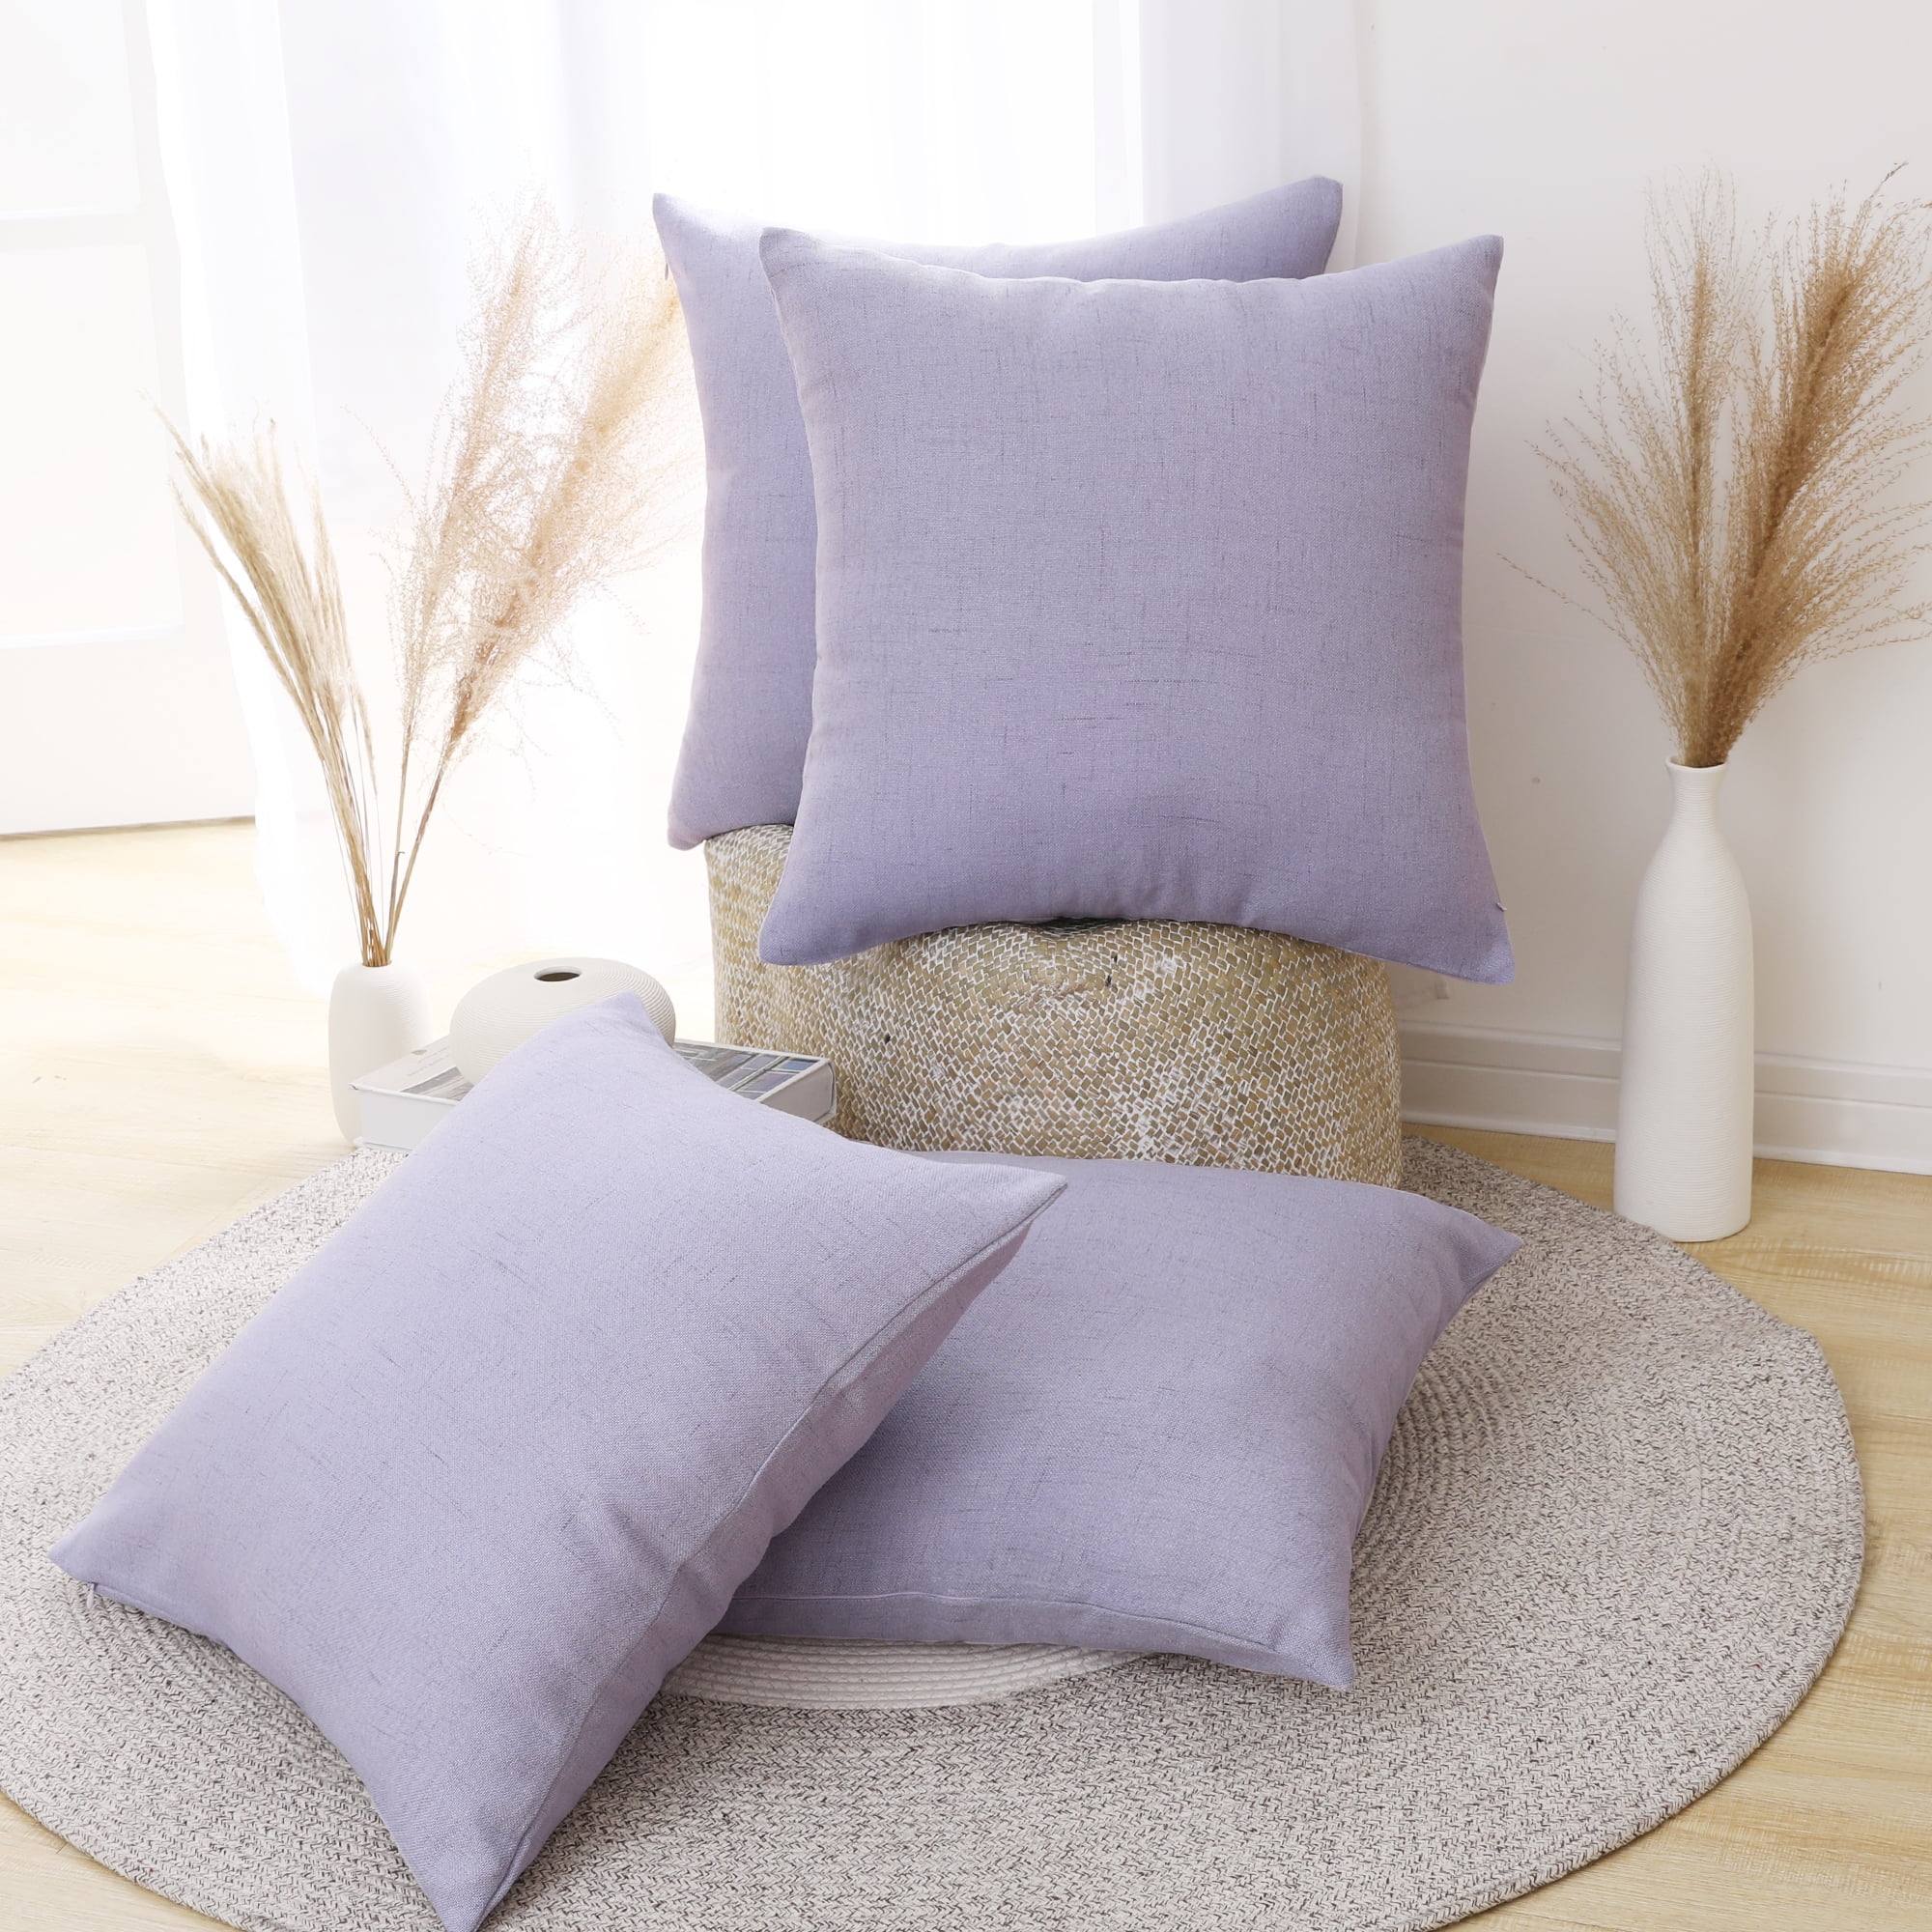 Chair Lumbar Pilow Navy Blue Pillow Case 10 X 24 Inches 24 X 60 Cm Pair Lumbar Cover Carpet Cushion Cover Lumbar Pillow